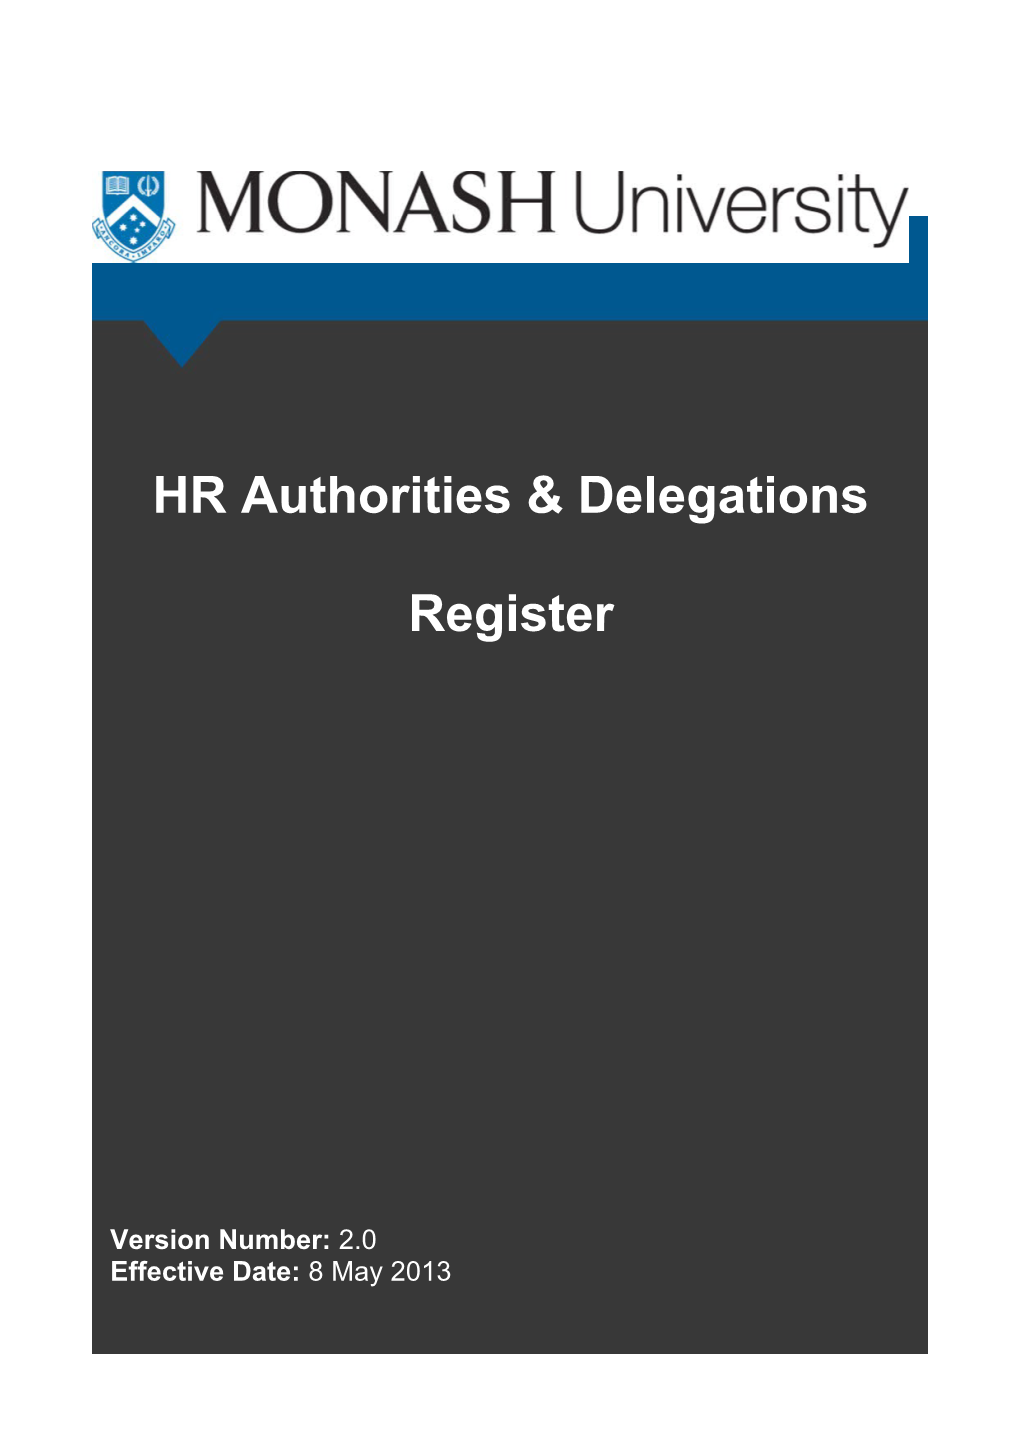 HR Authorities & Delegations